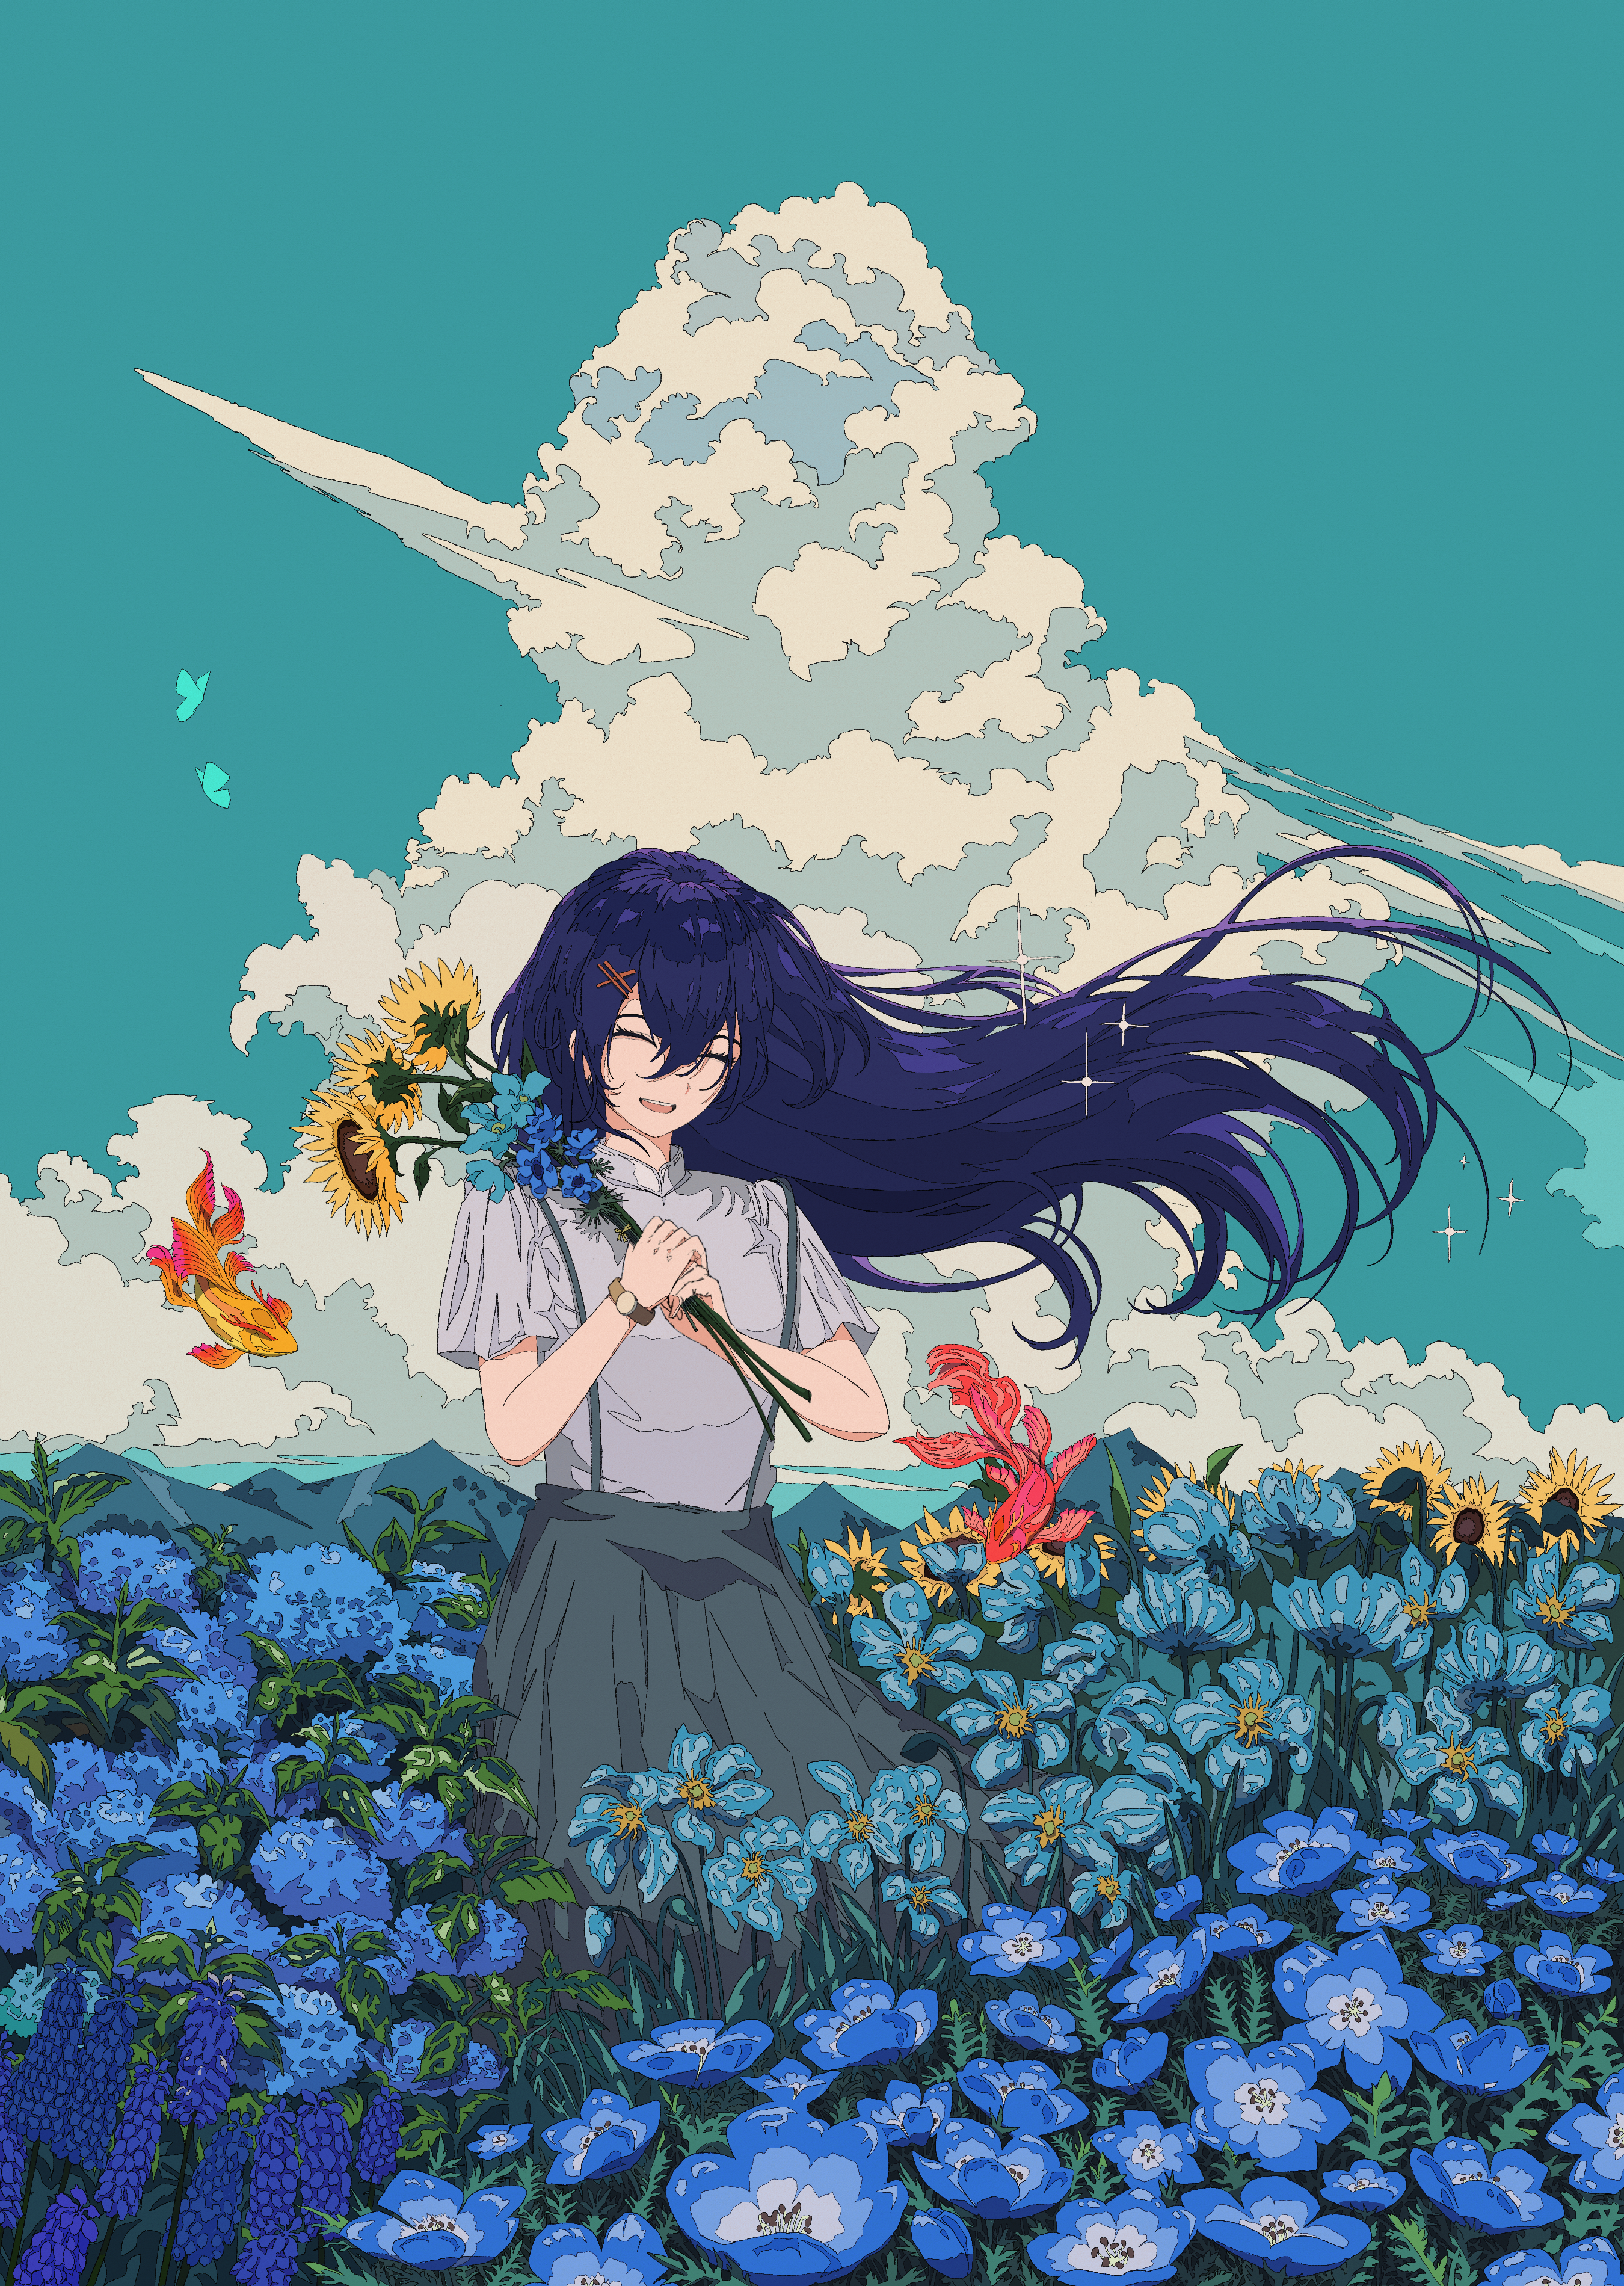 Anime 2700x3800 Umijin anime digital art artwork illustration environment landscape clouds flowers portrait display sunflowers happy mountains